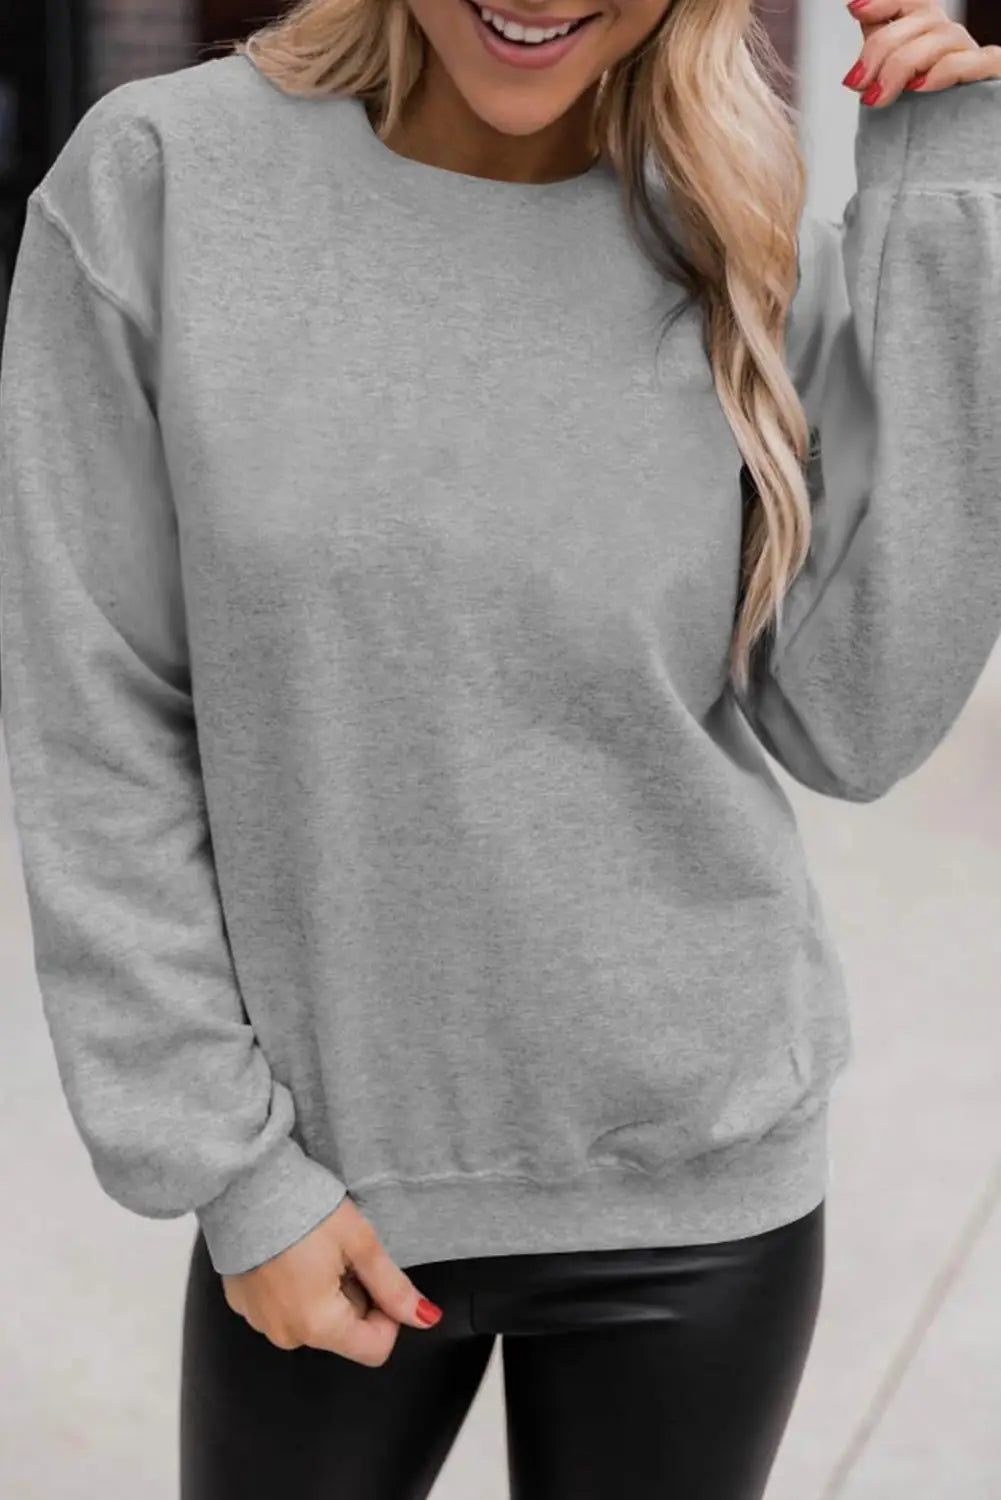 Gray solid classic crewneck pullover sweatshirt - 2xl / 50% polyester + 50% cotton - sweatshirts & hoodies